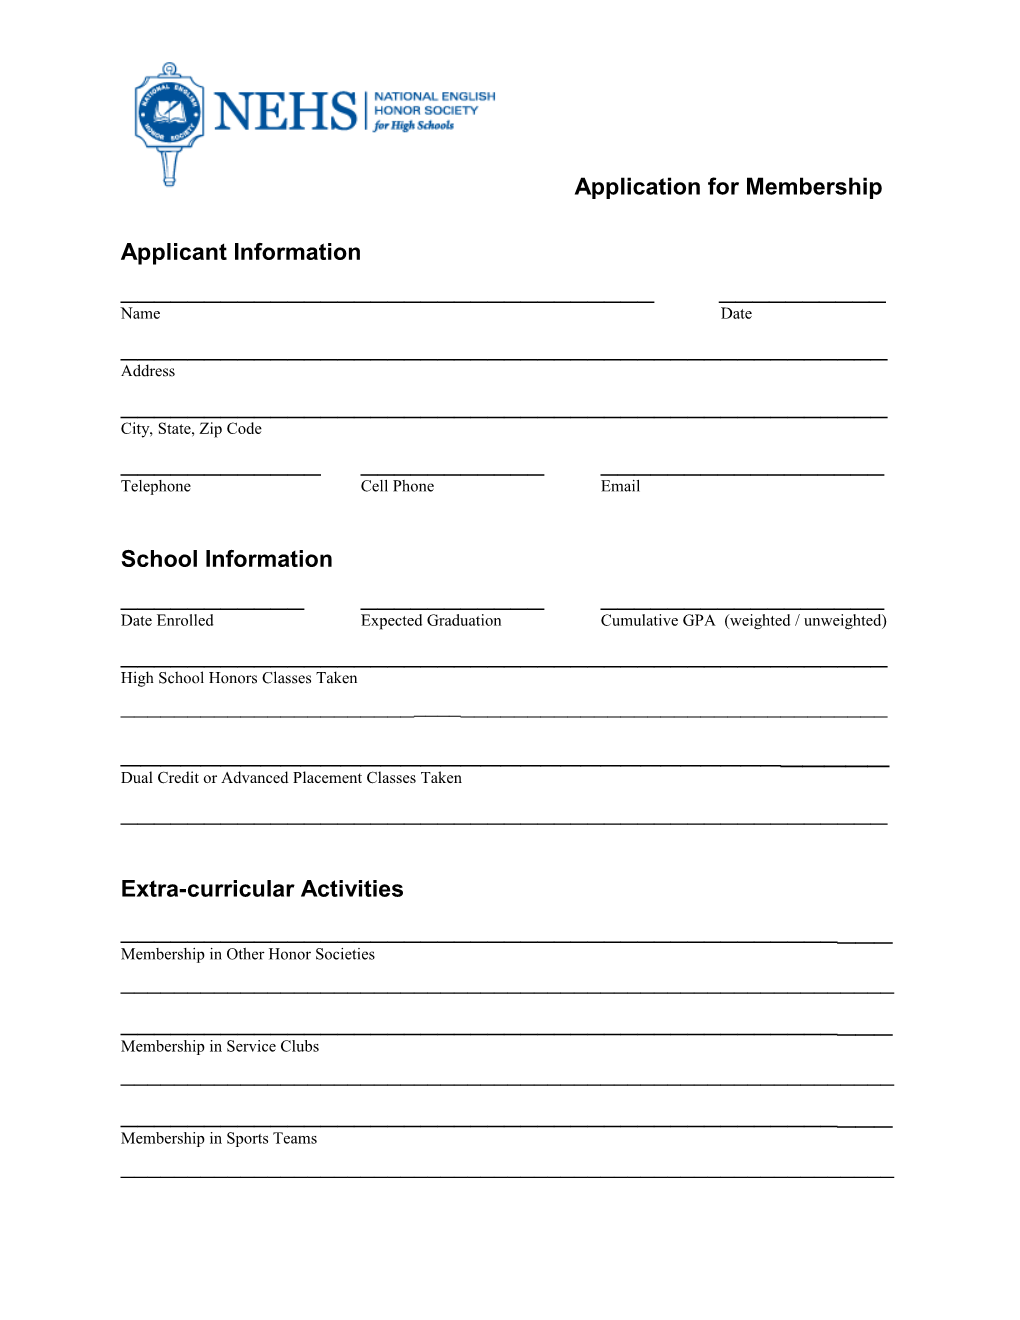 Application for Membership s3